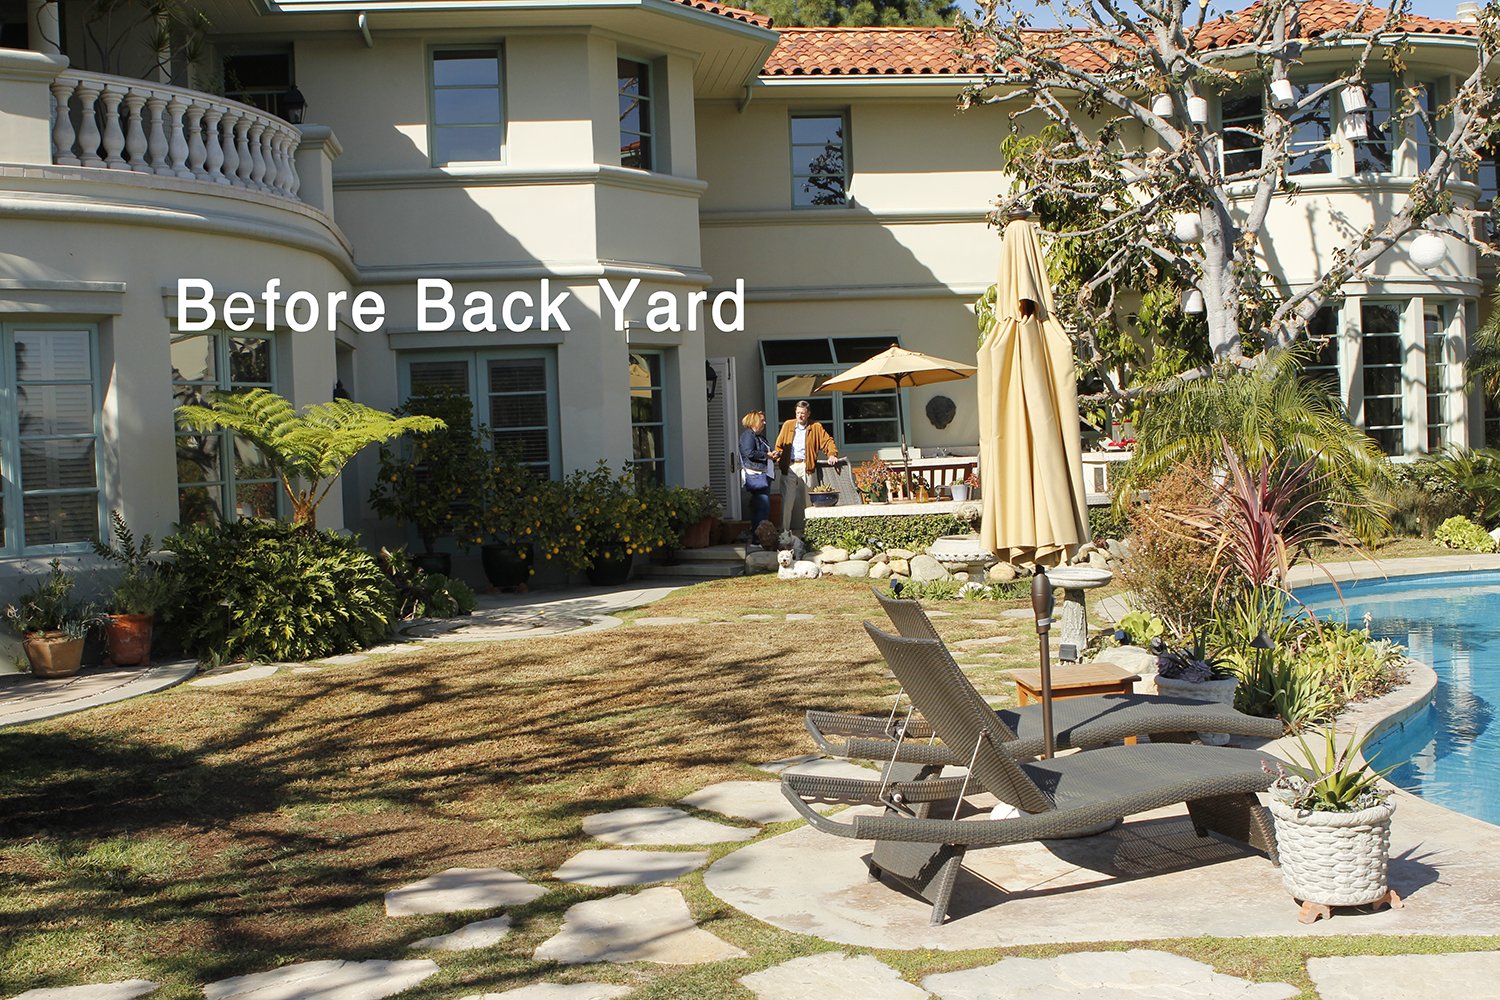 Whimsical Back Yard - Mulholland Estates - Backyard Before 2.jpg